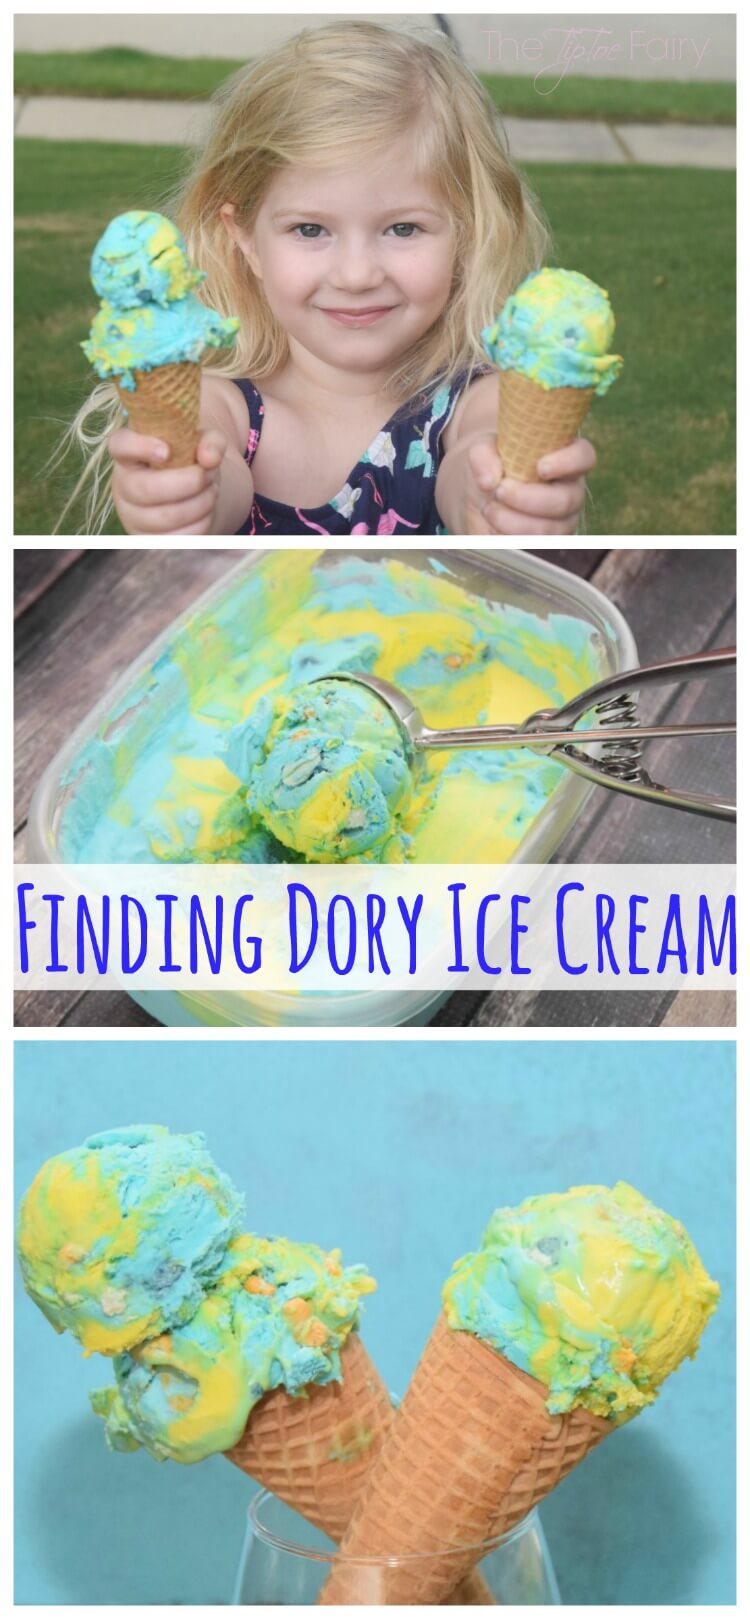 Just for #IceCreamWeek - Finding Dory Ice Cream - No Churn Style! #food #icecream